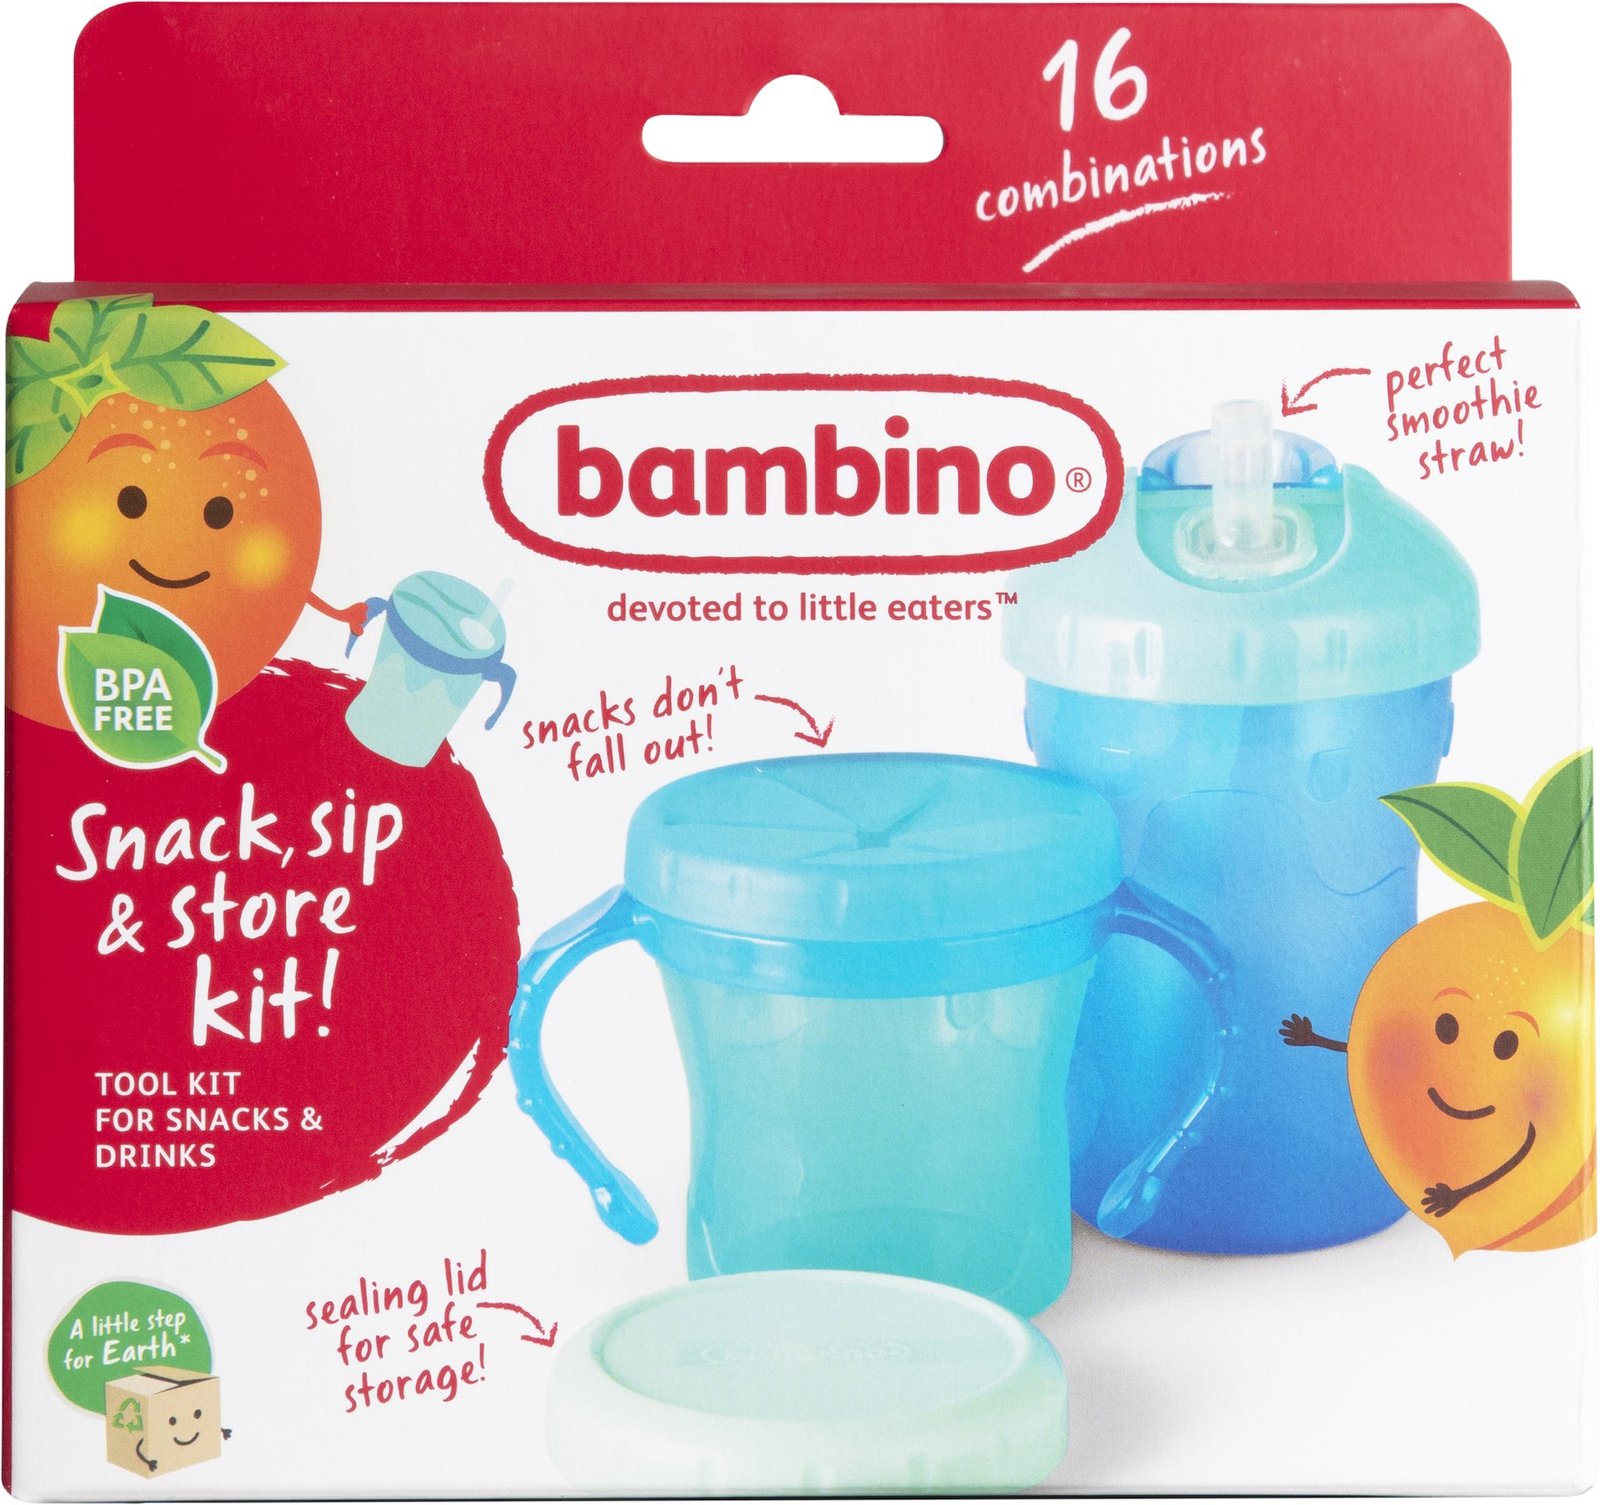 Bambino Snack, sip & store kit!